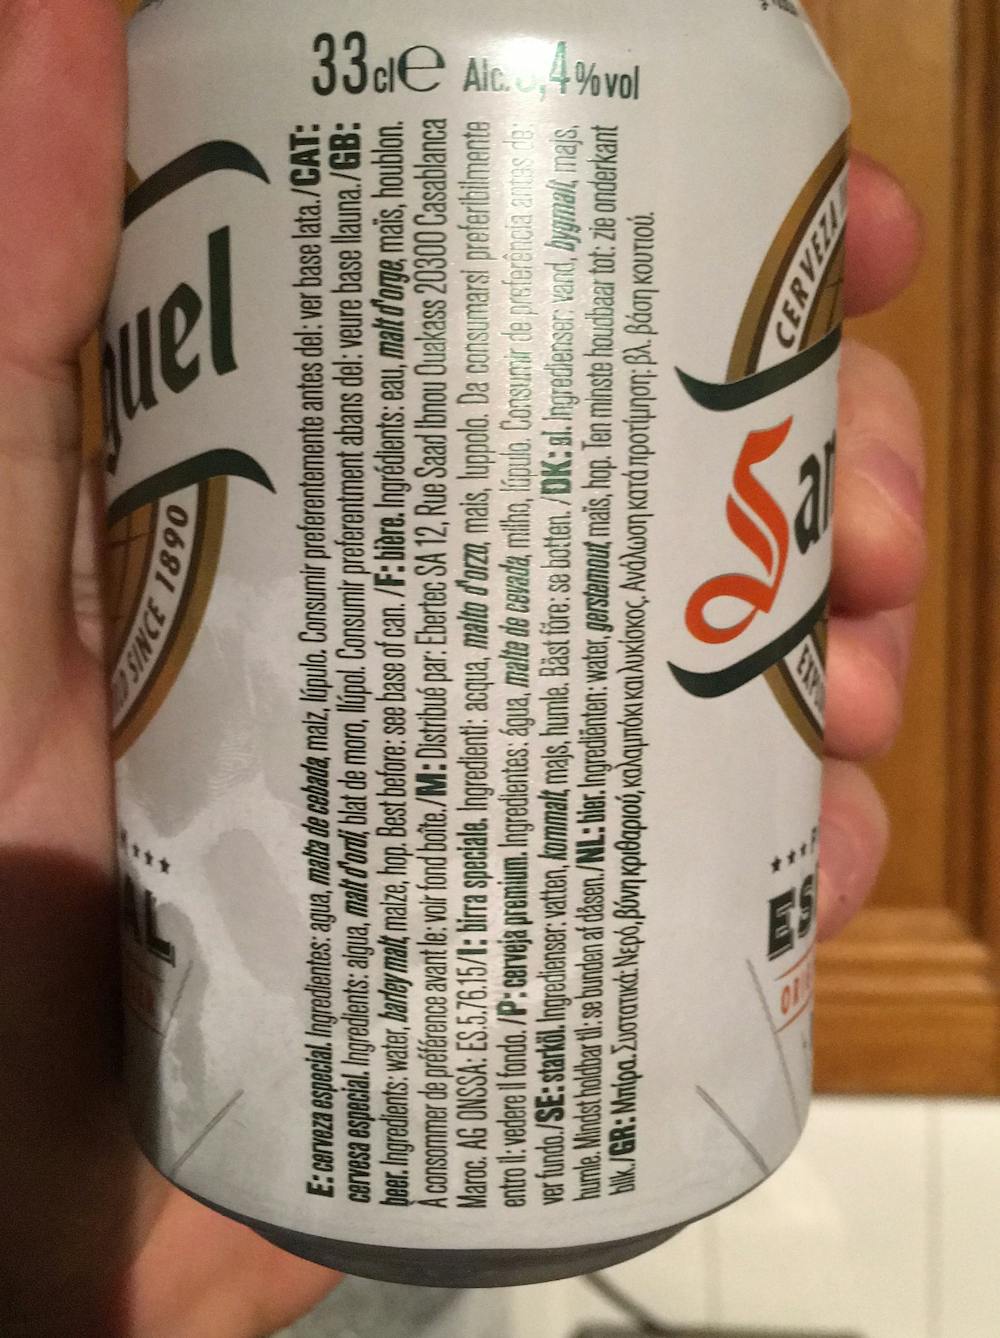 Ingredienslisten til San Miguel Original lager beer